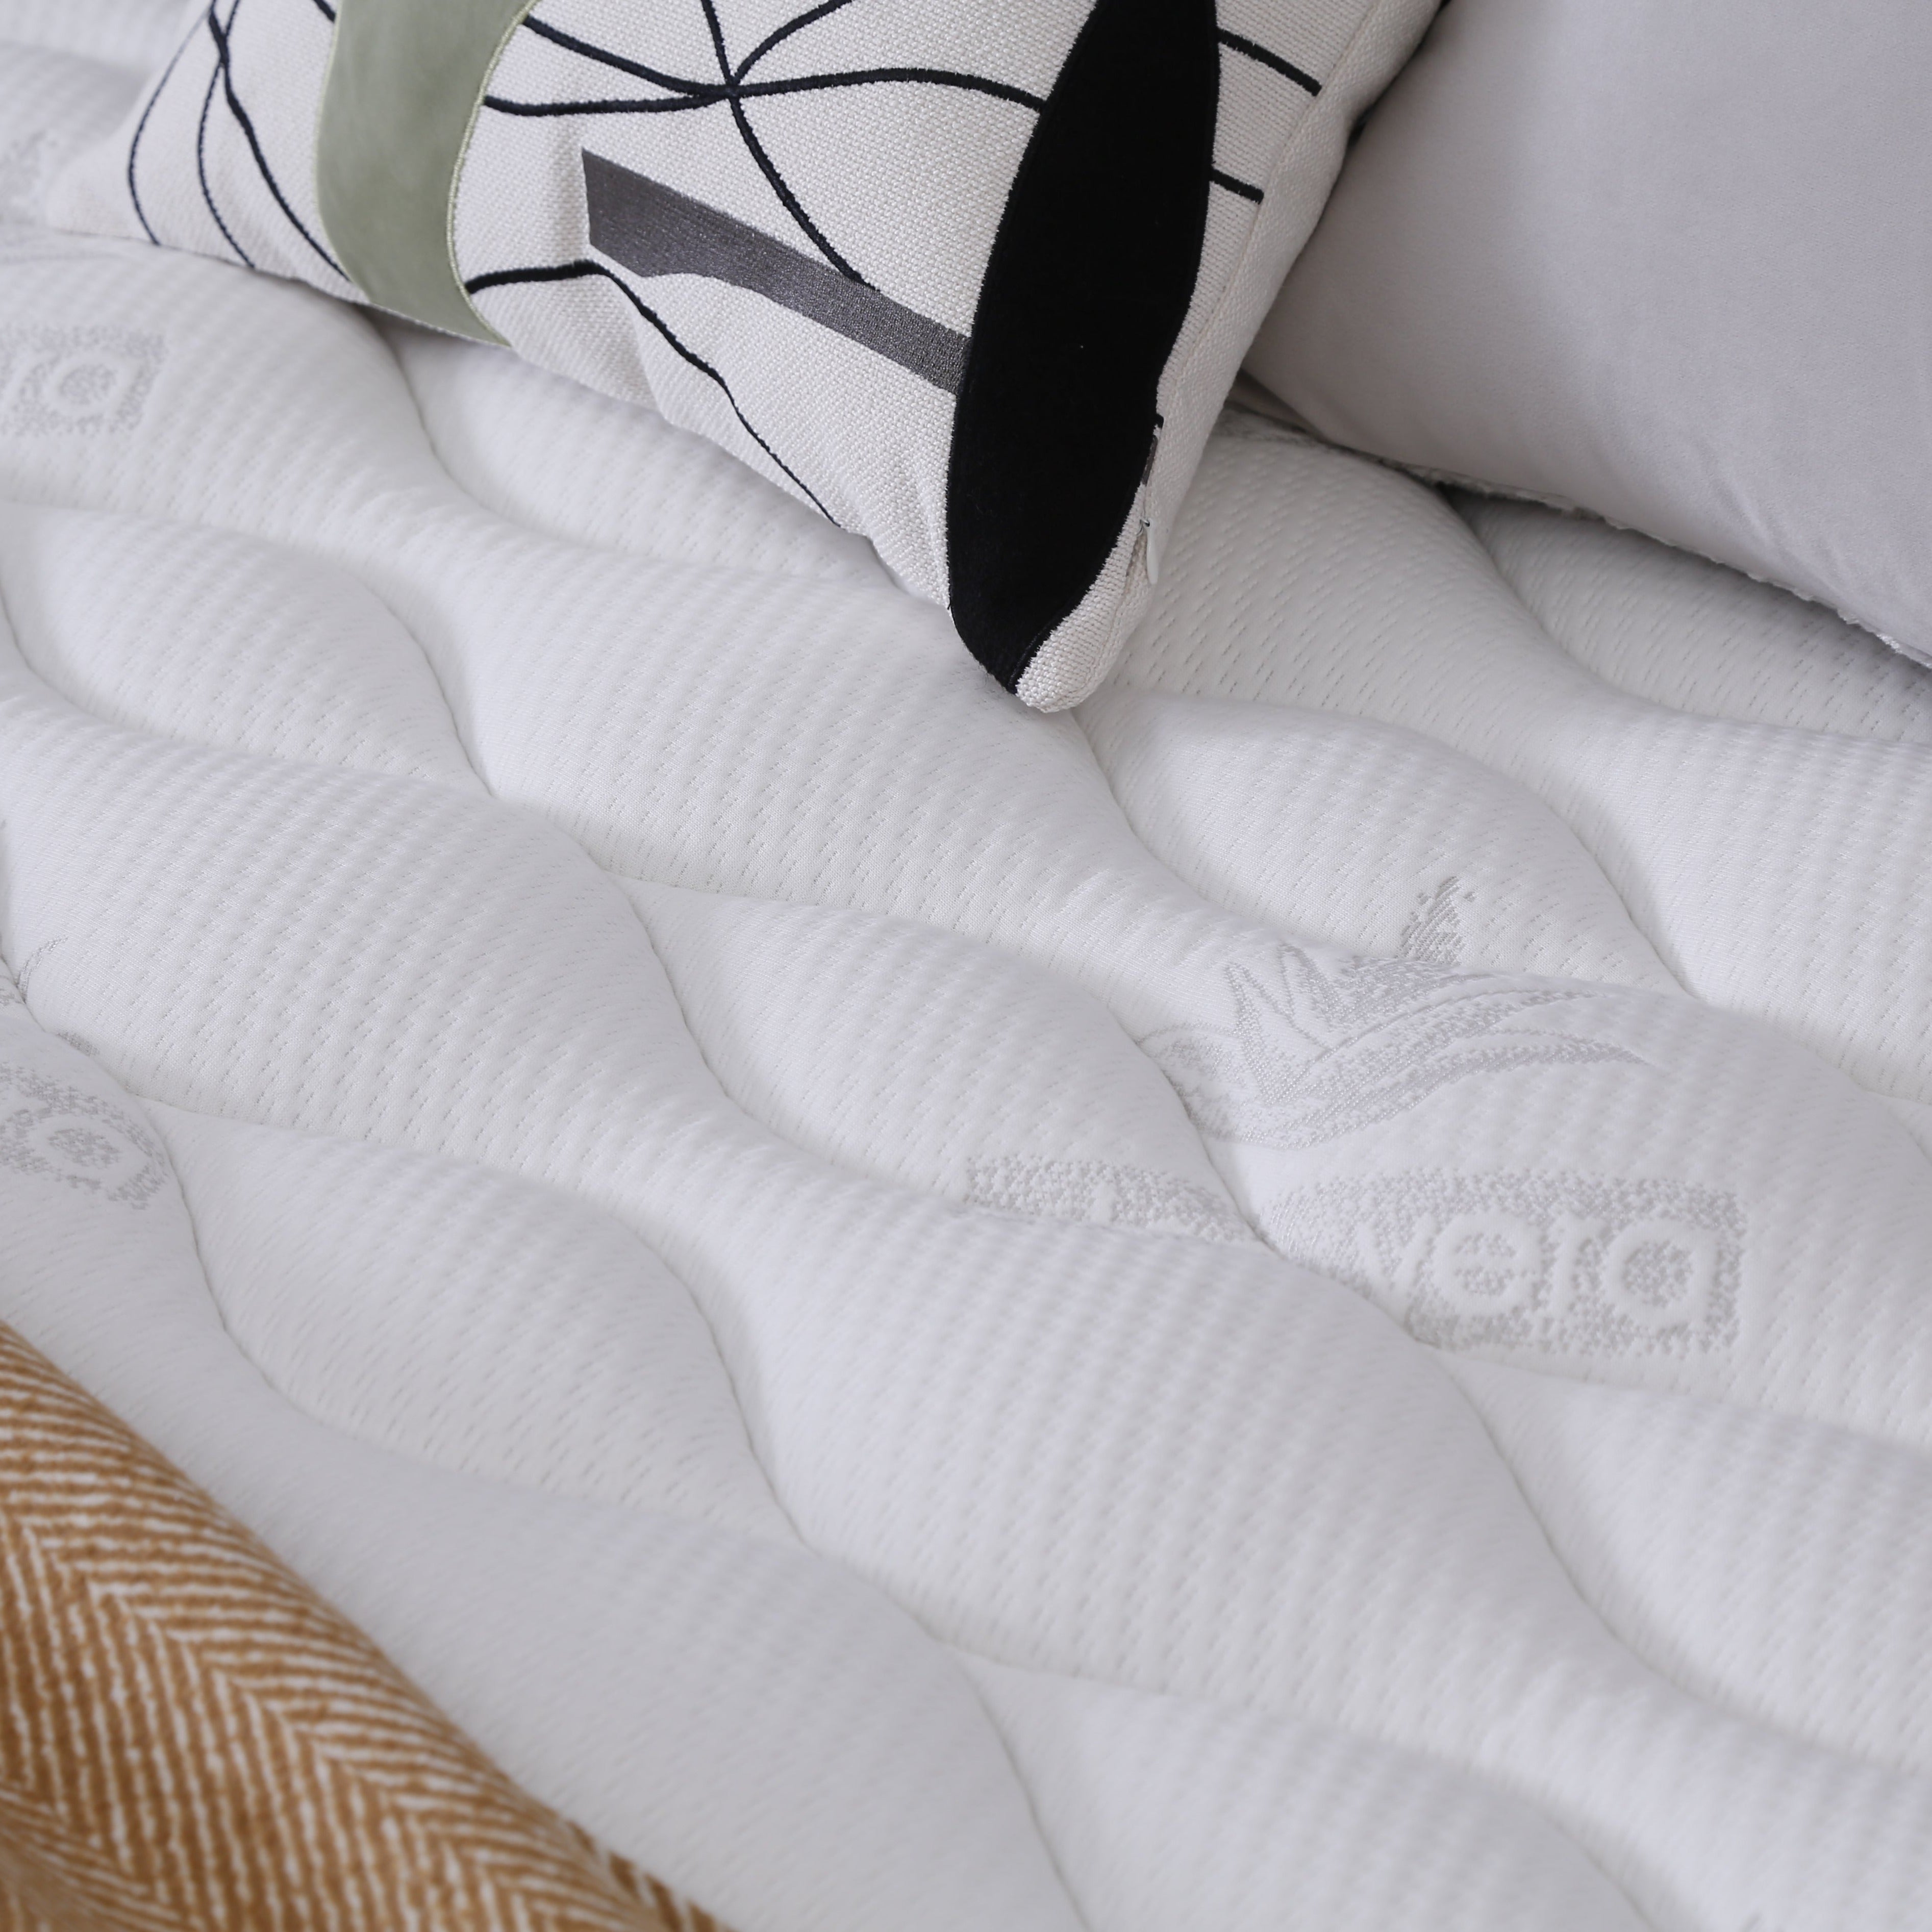 DreamWorld - Comfort Rúm   90-180 cm.